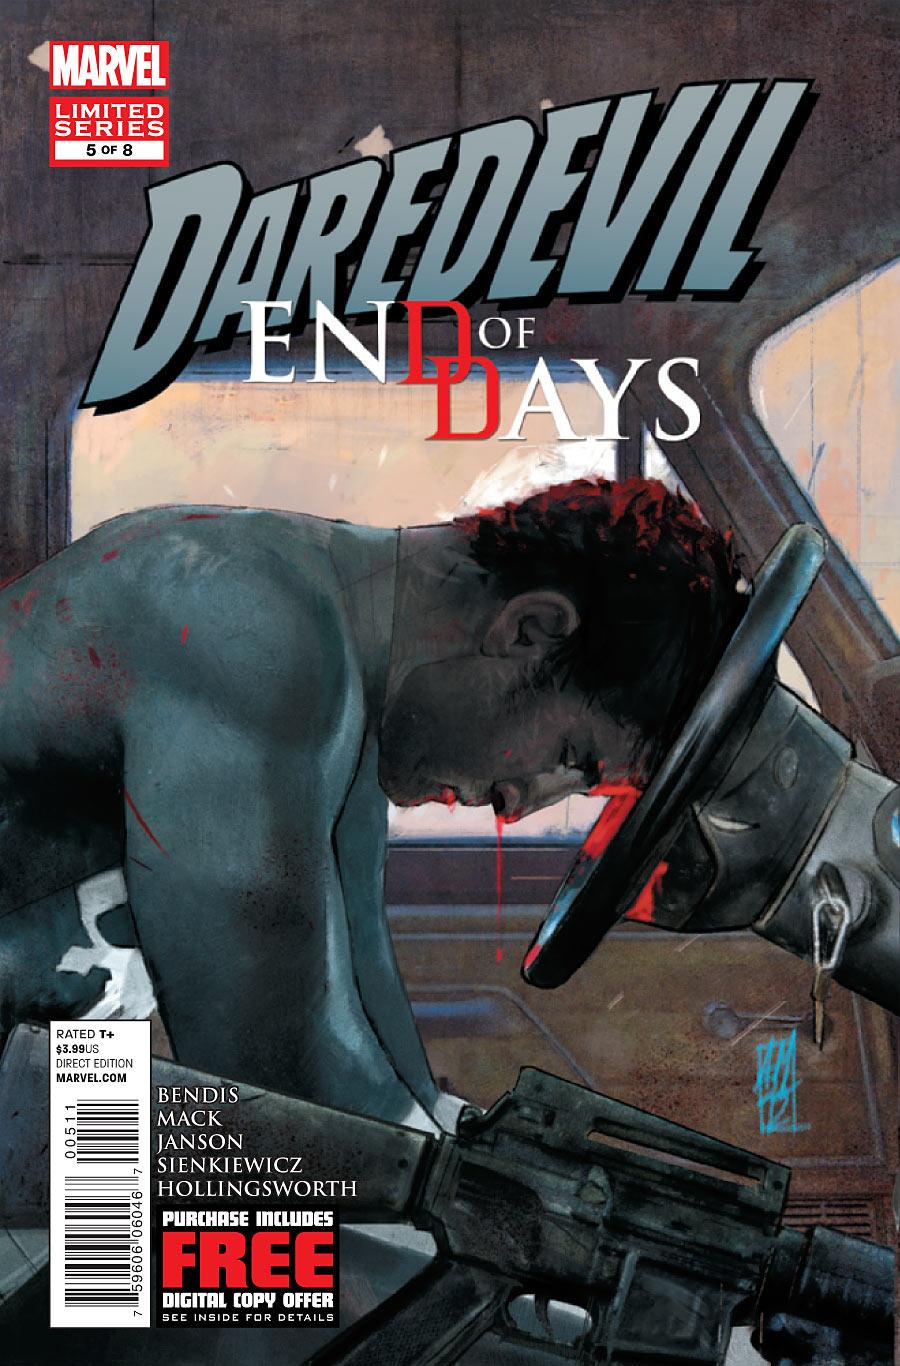 Daredevil: End of Days Vol. 1 #5